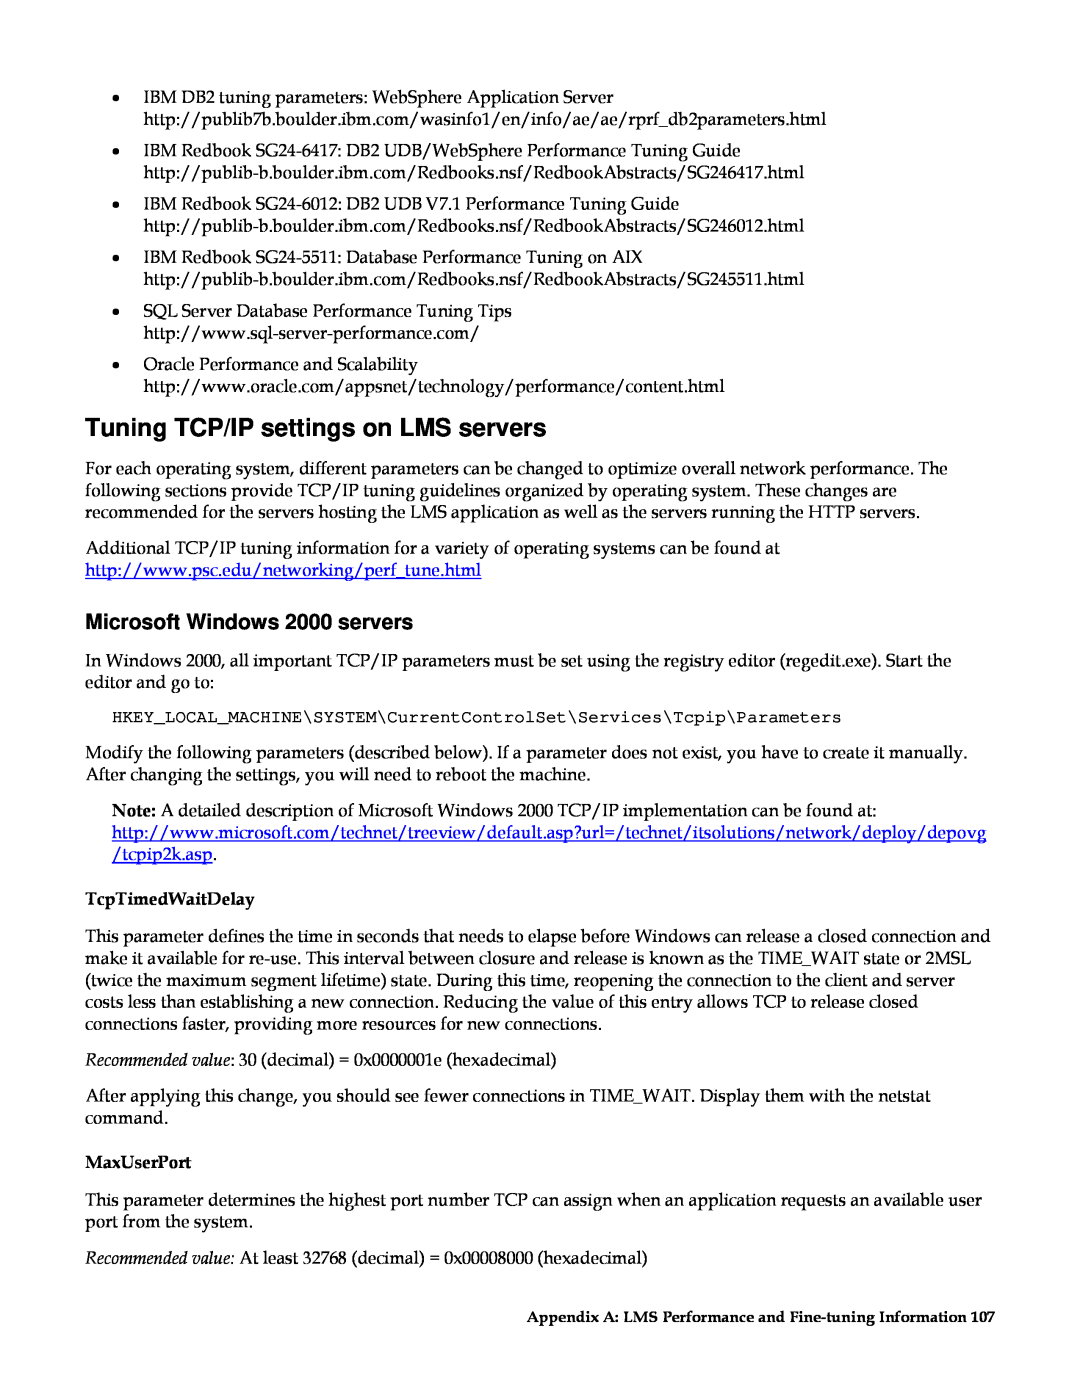 IBM G210-1784-00 Tuning TCP/IP settings on LMS servers, Microsoft Windows 2000 servers, TcpTimedWaitDelay, MaxUserPort 